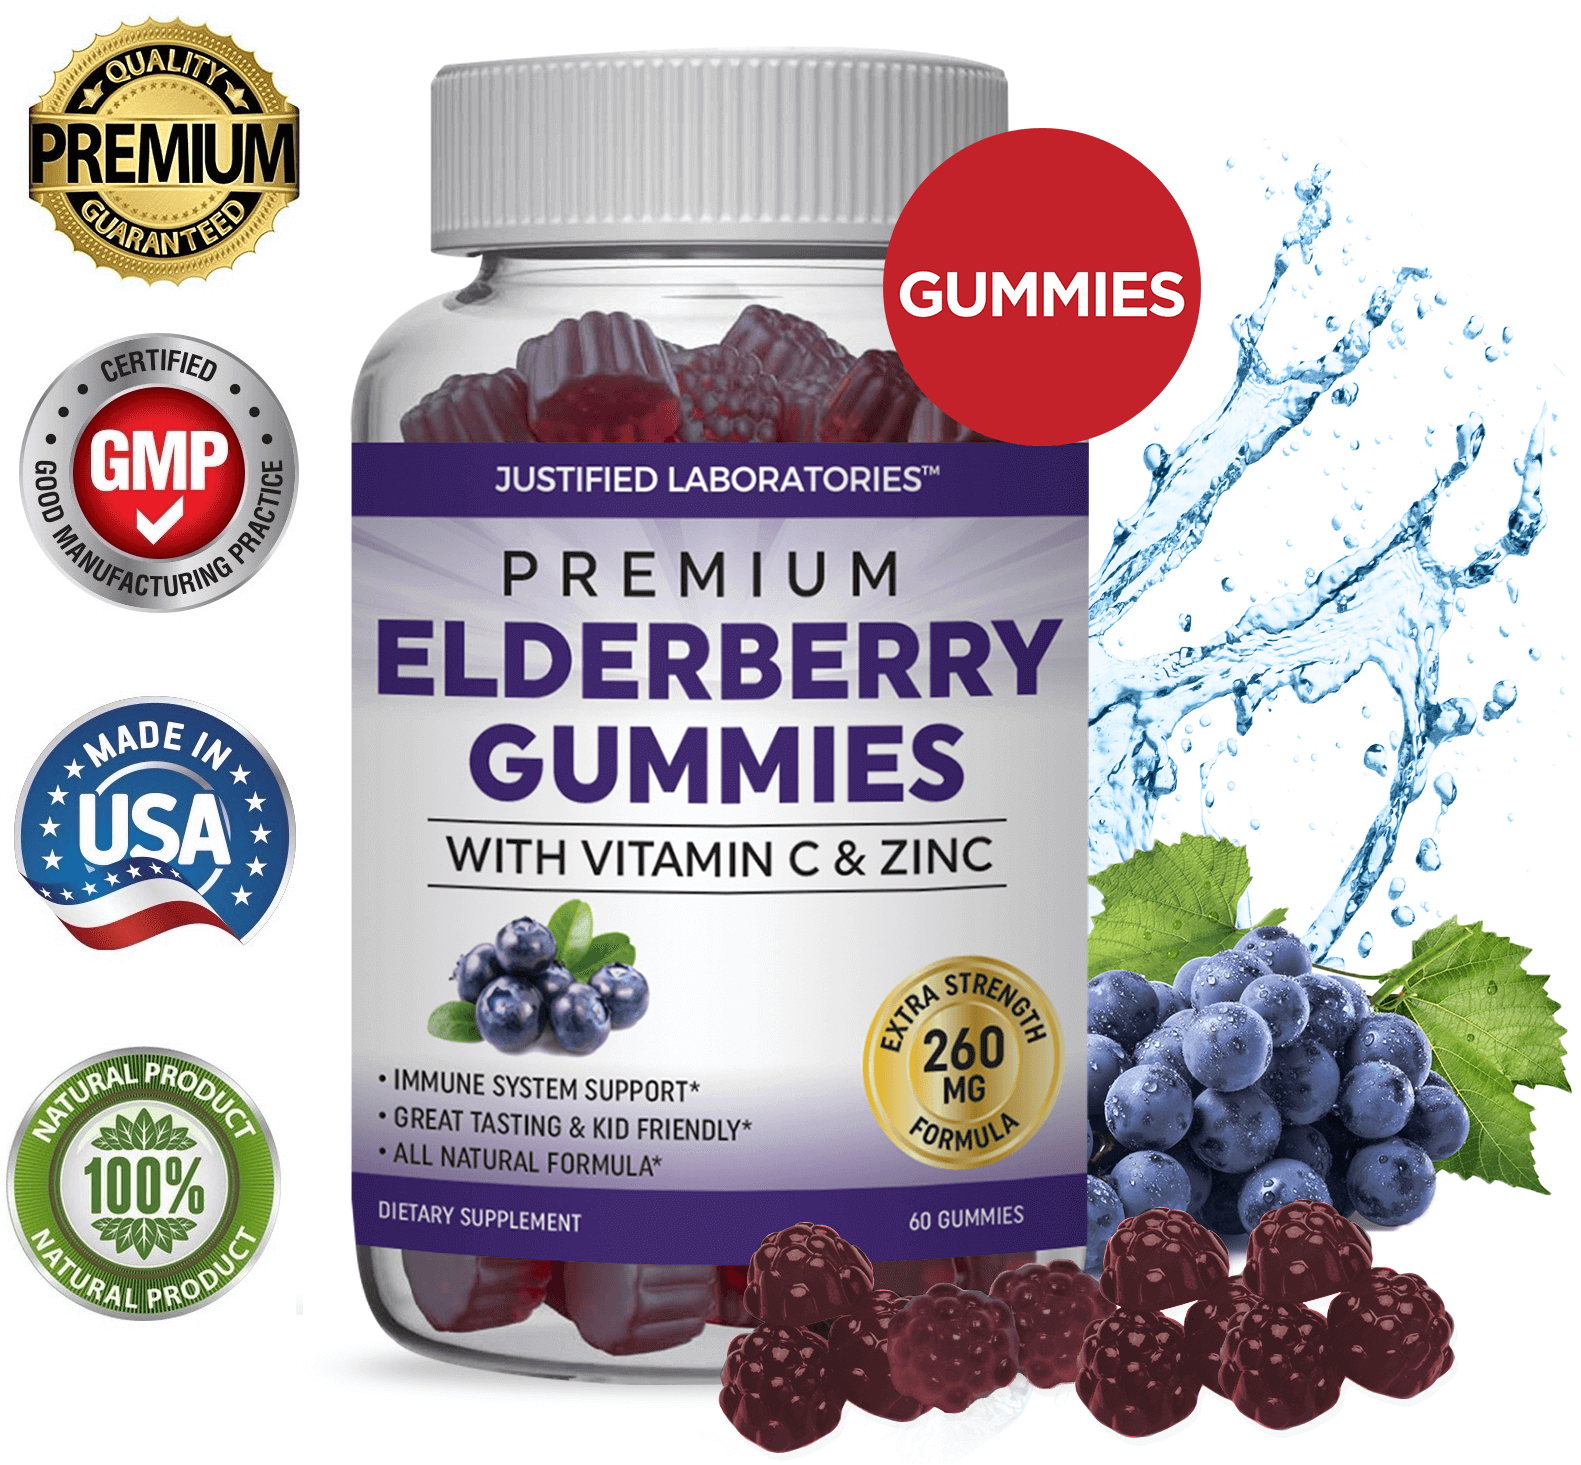 Elderberry gummies safe to use